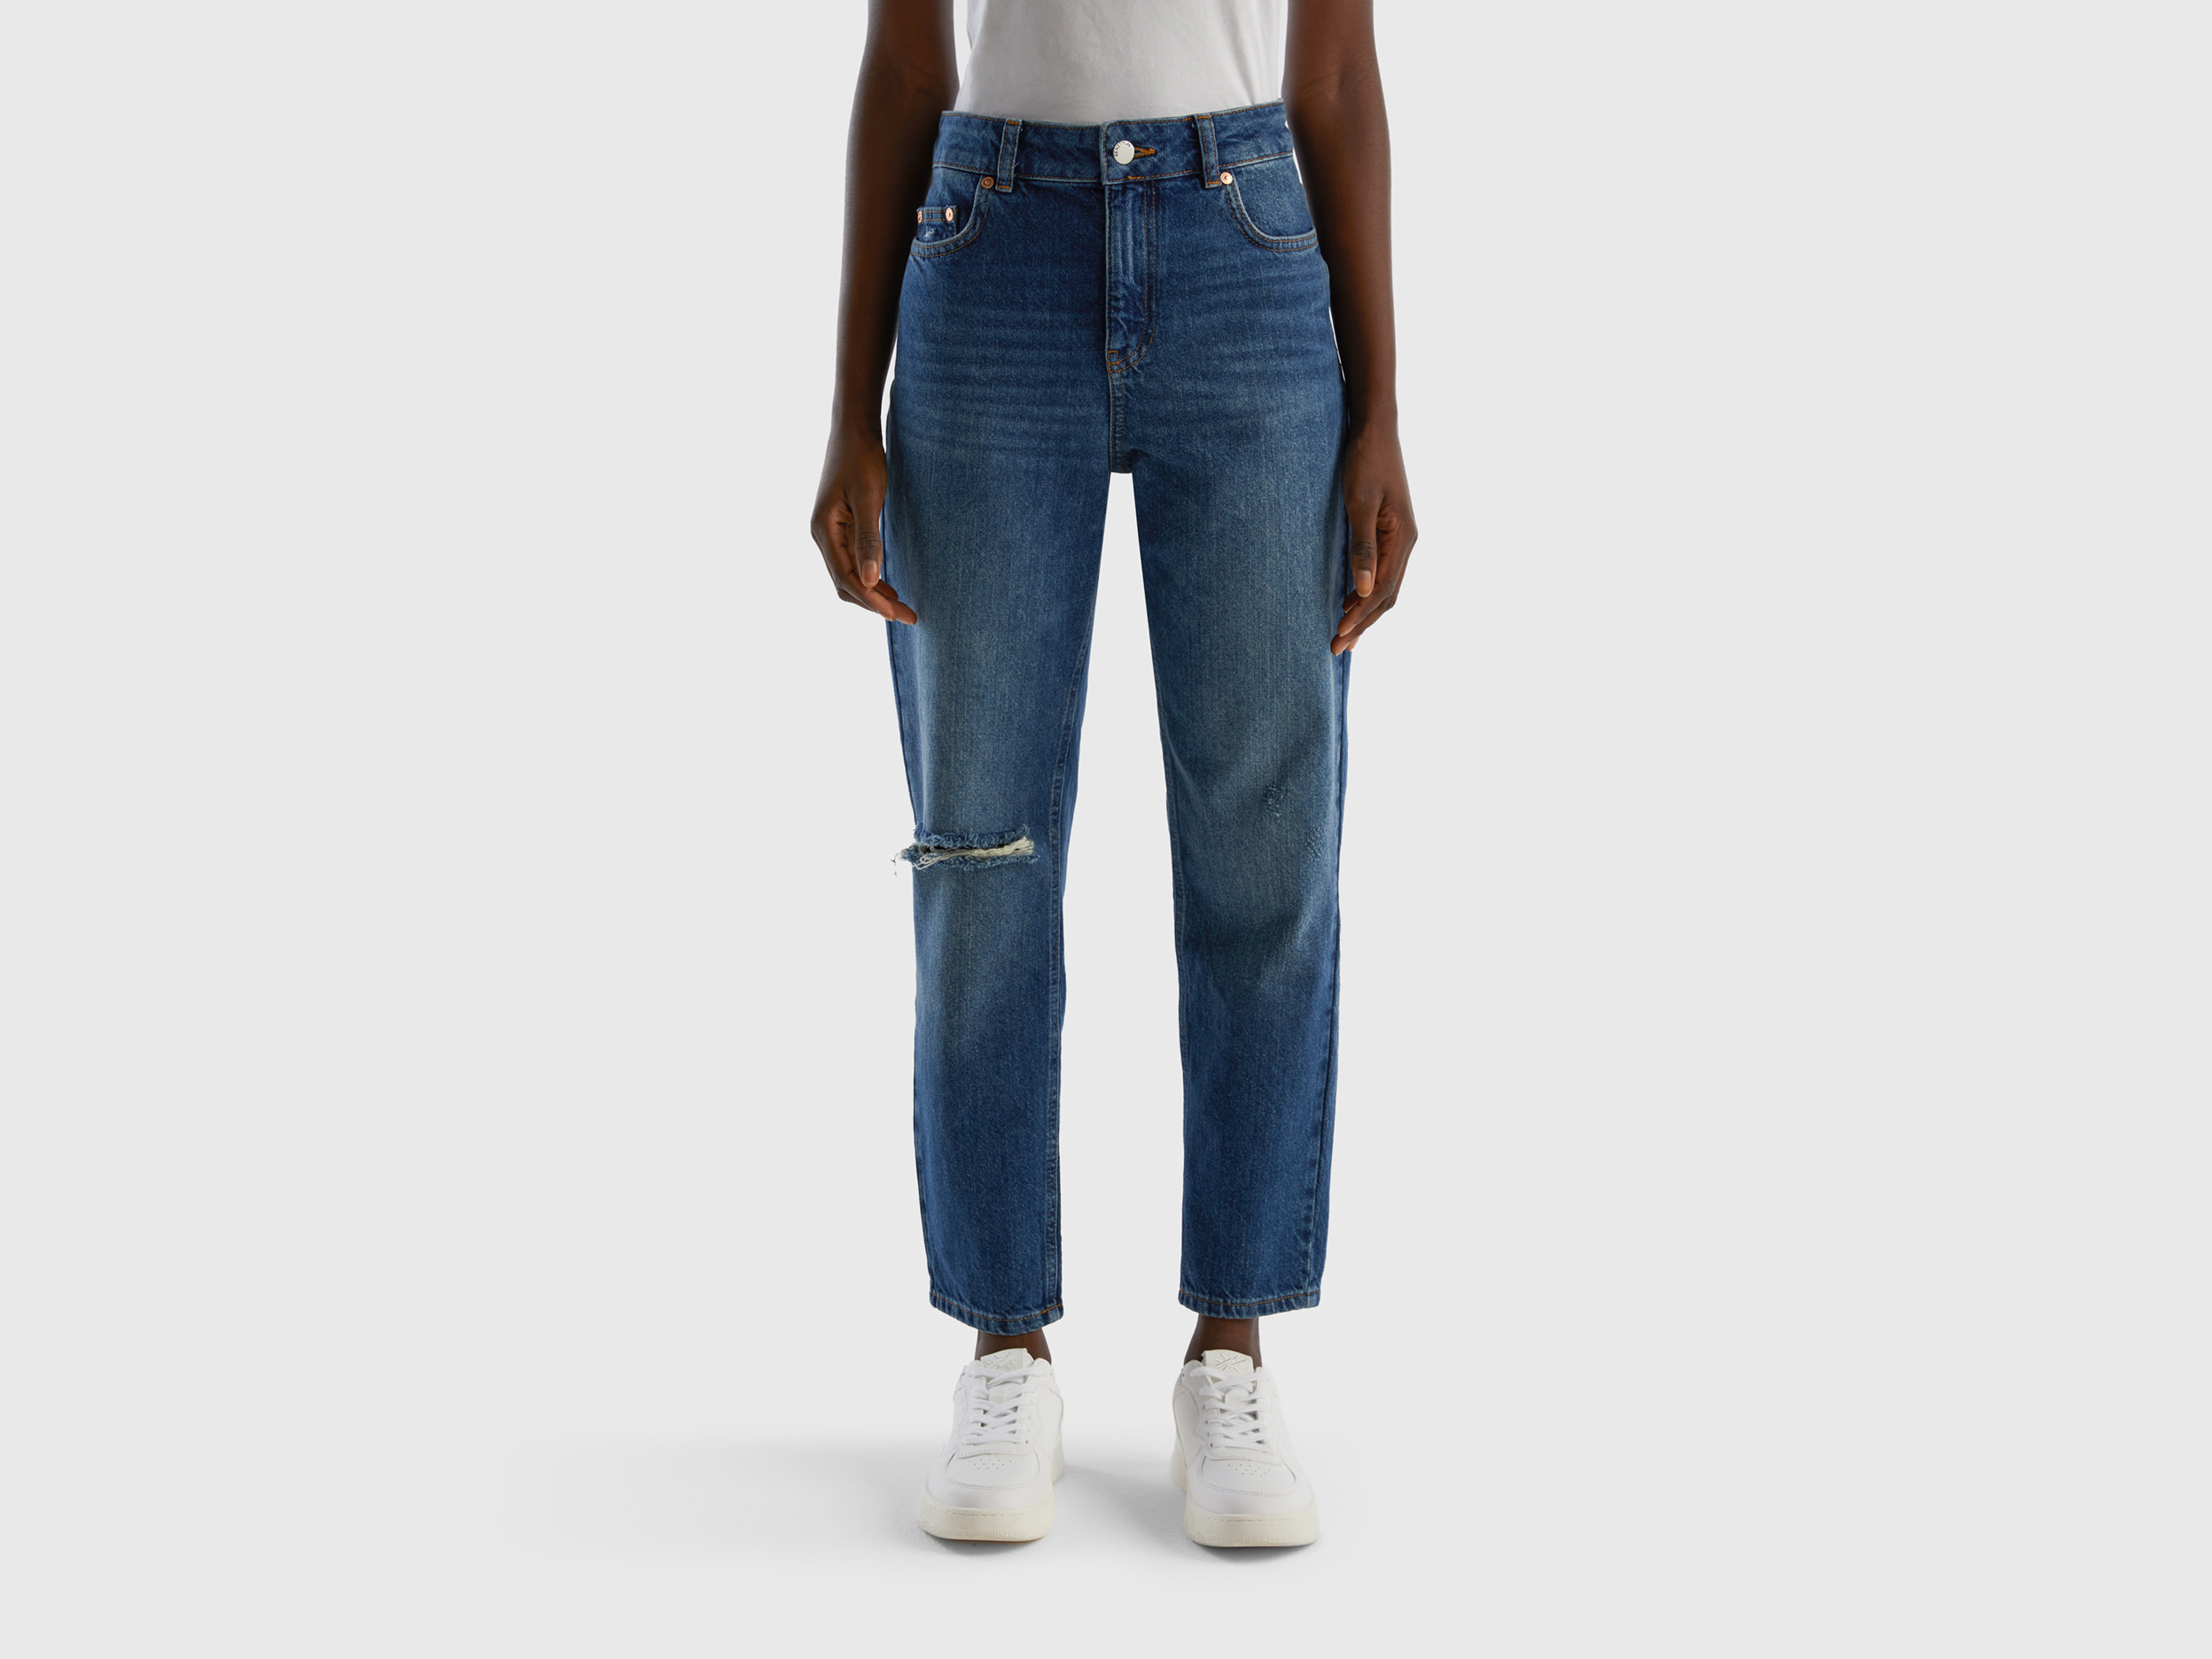 Benetton, Cropped High-waisted Jeans, size 27, Dark Blue, Women